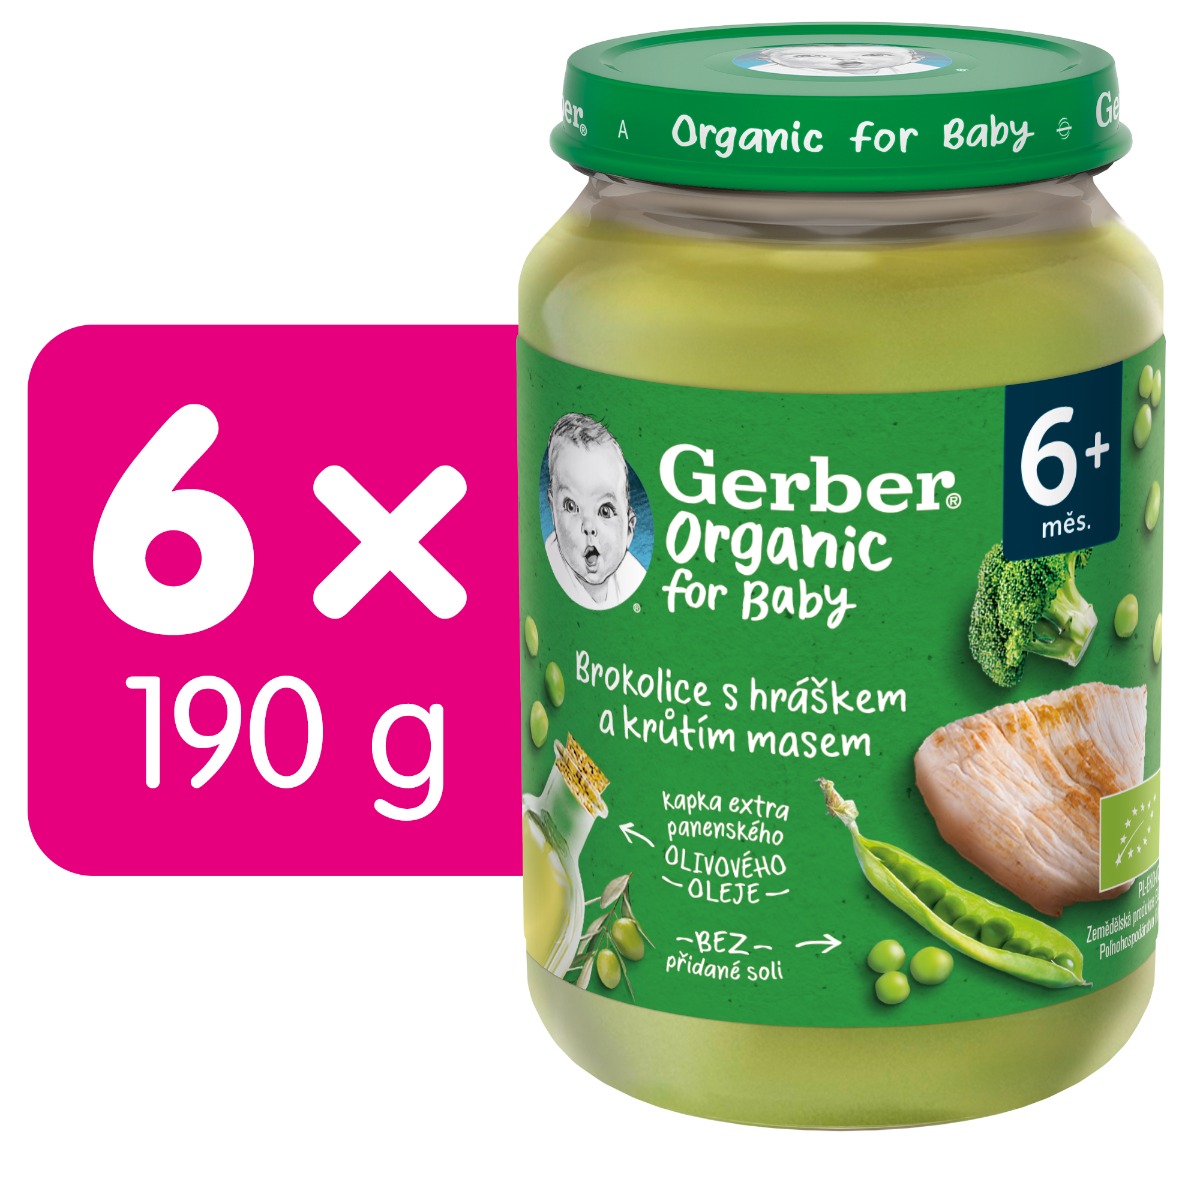 Gerber Organic for Baby Brokolice